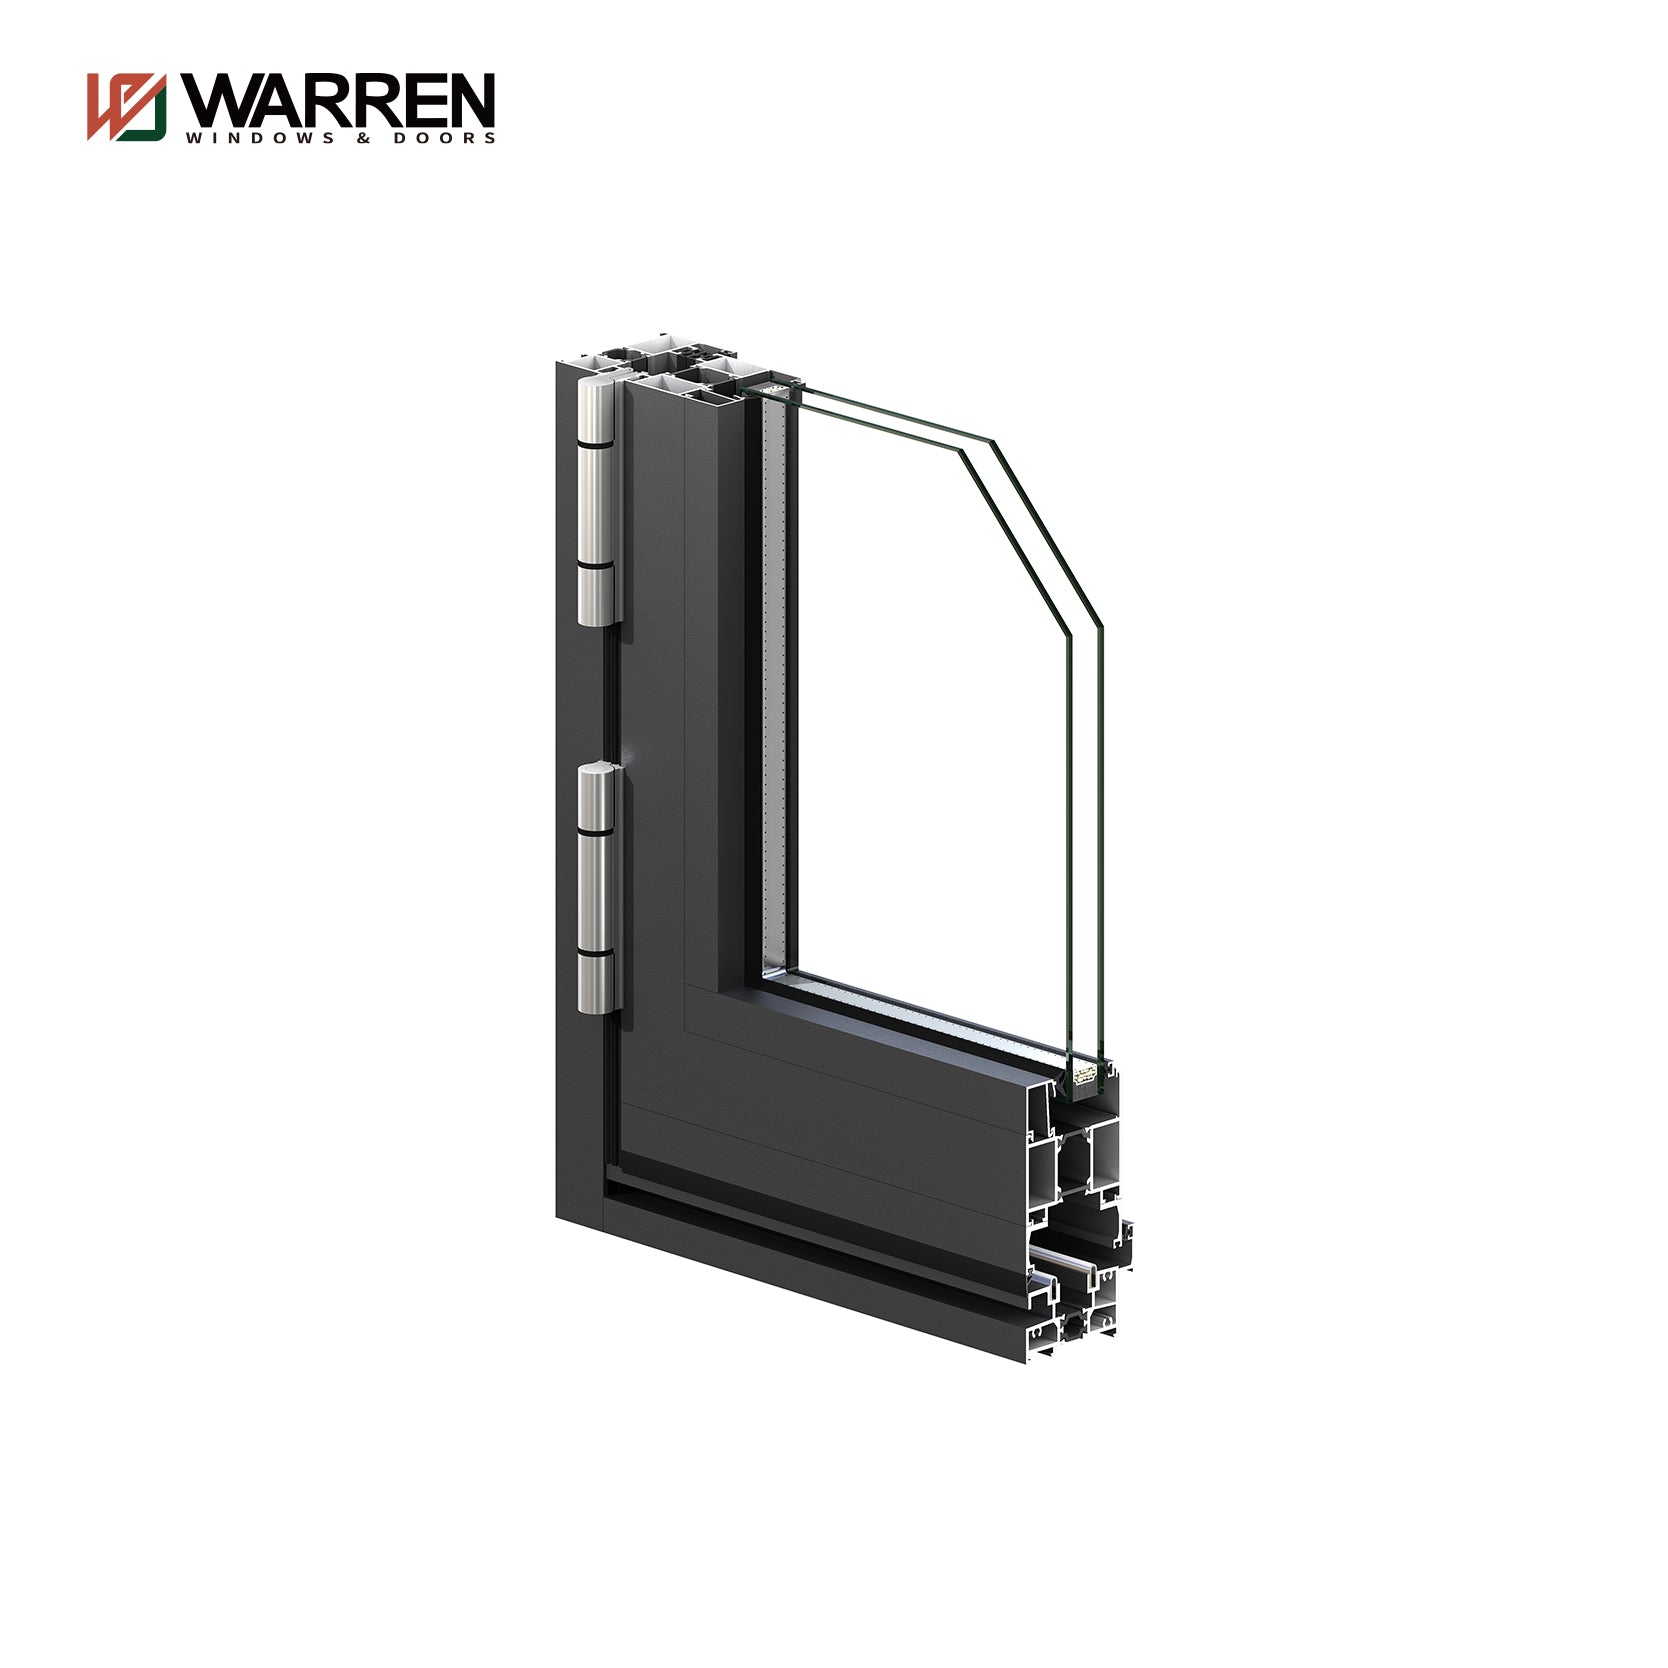 Warren Latest  Style Standards  Frameless Glazed Bi Folding Door Soundproof System Movable Fold Door